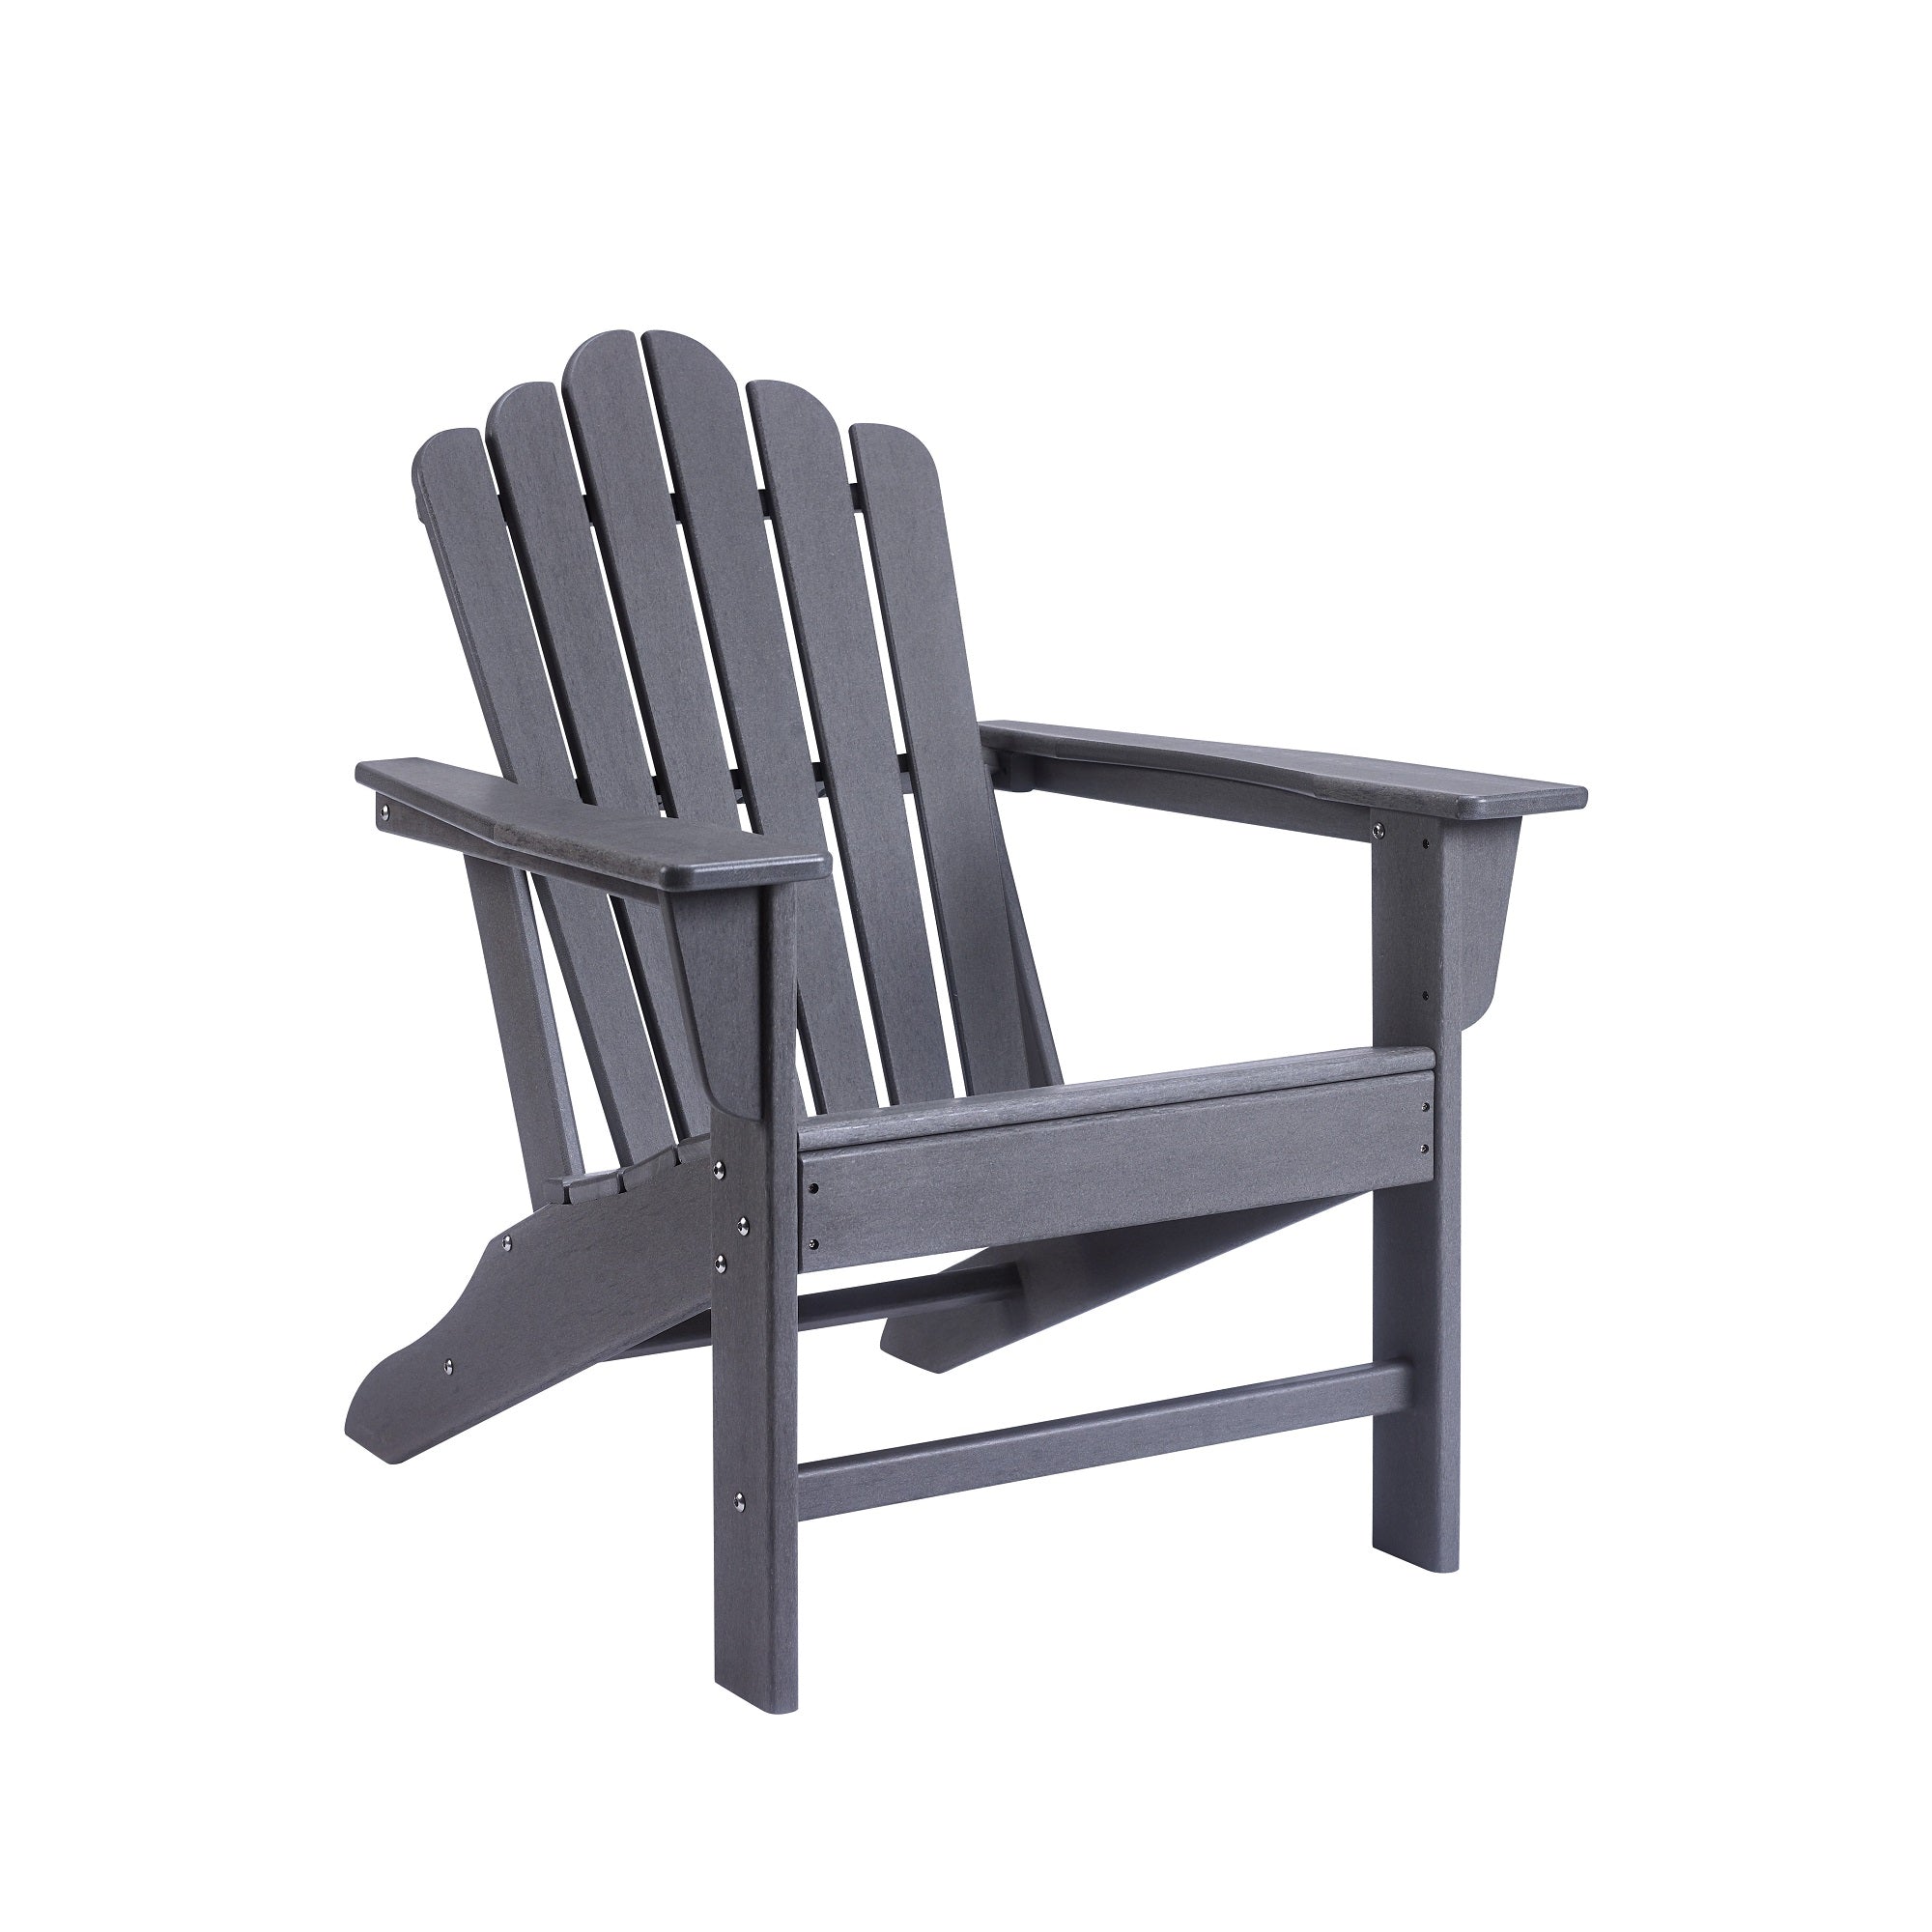 Classic Plastic Outdoor  Adirondack Chair for Outdoor Garden Porch Patio Deck Backyard-Boyel Living